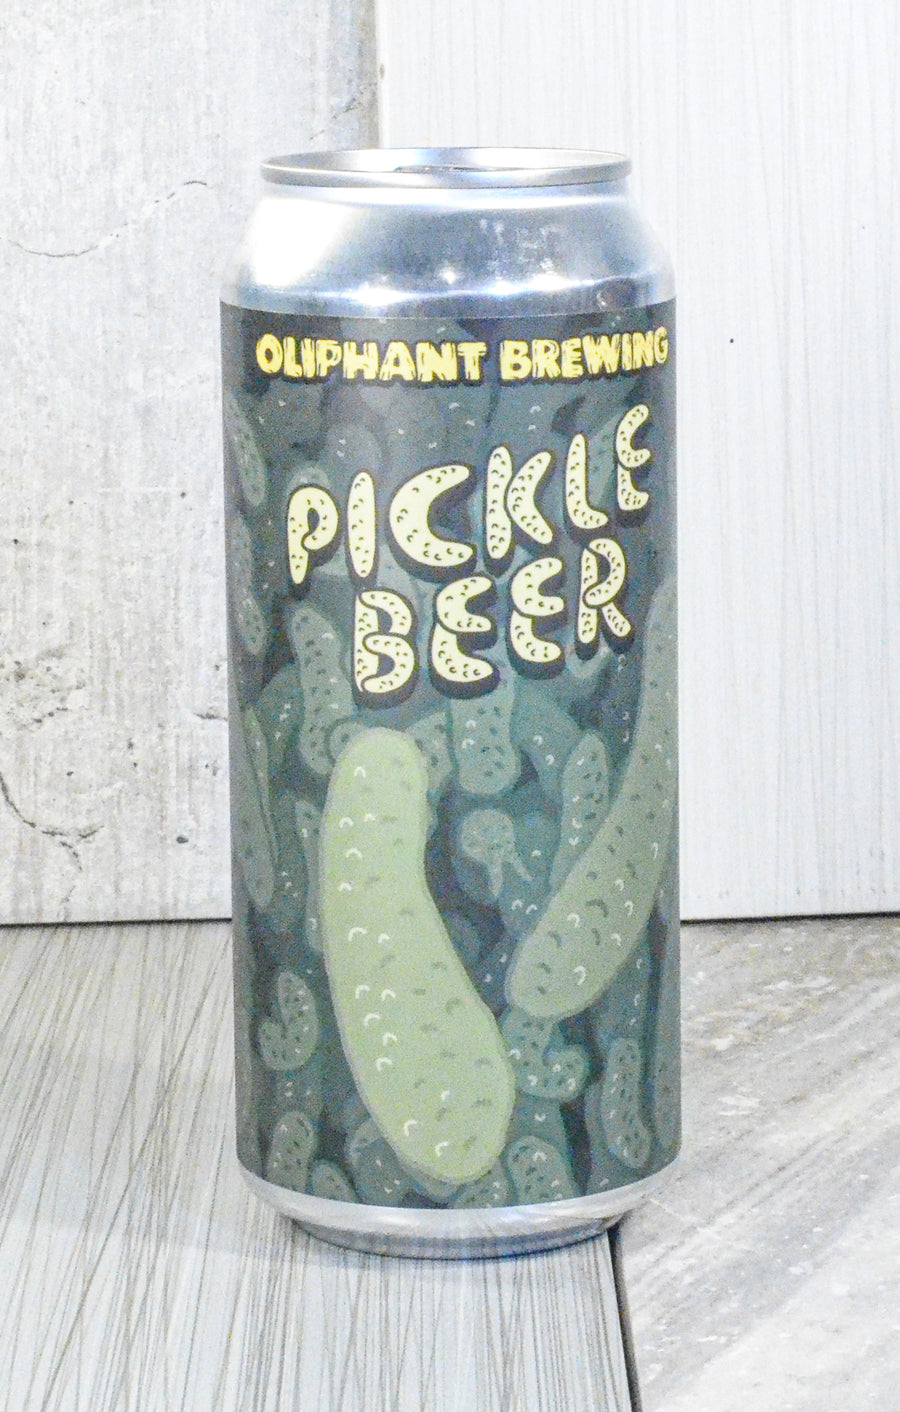 Oliphant Brewing, Pickle Beer SINGLE